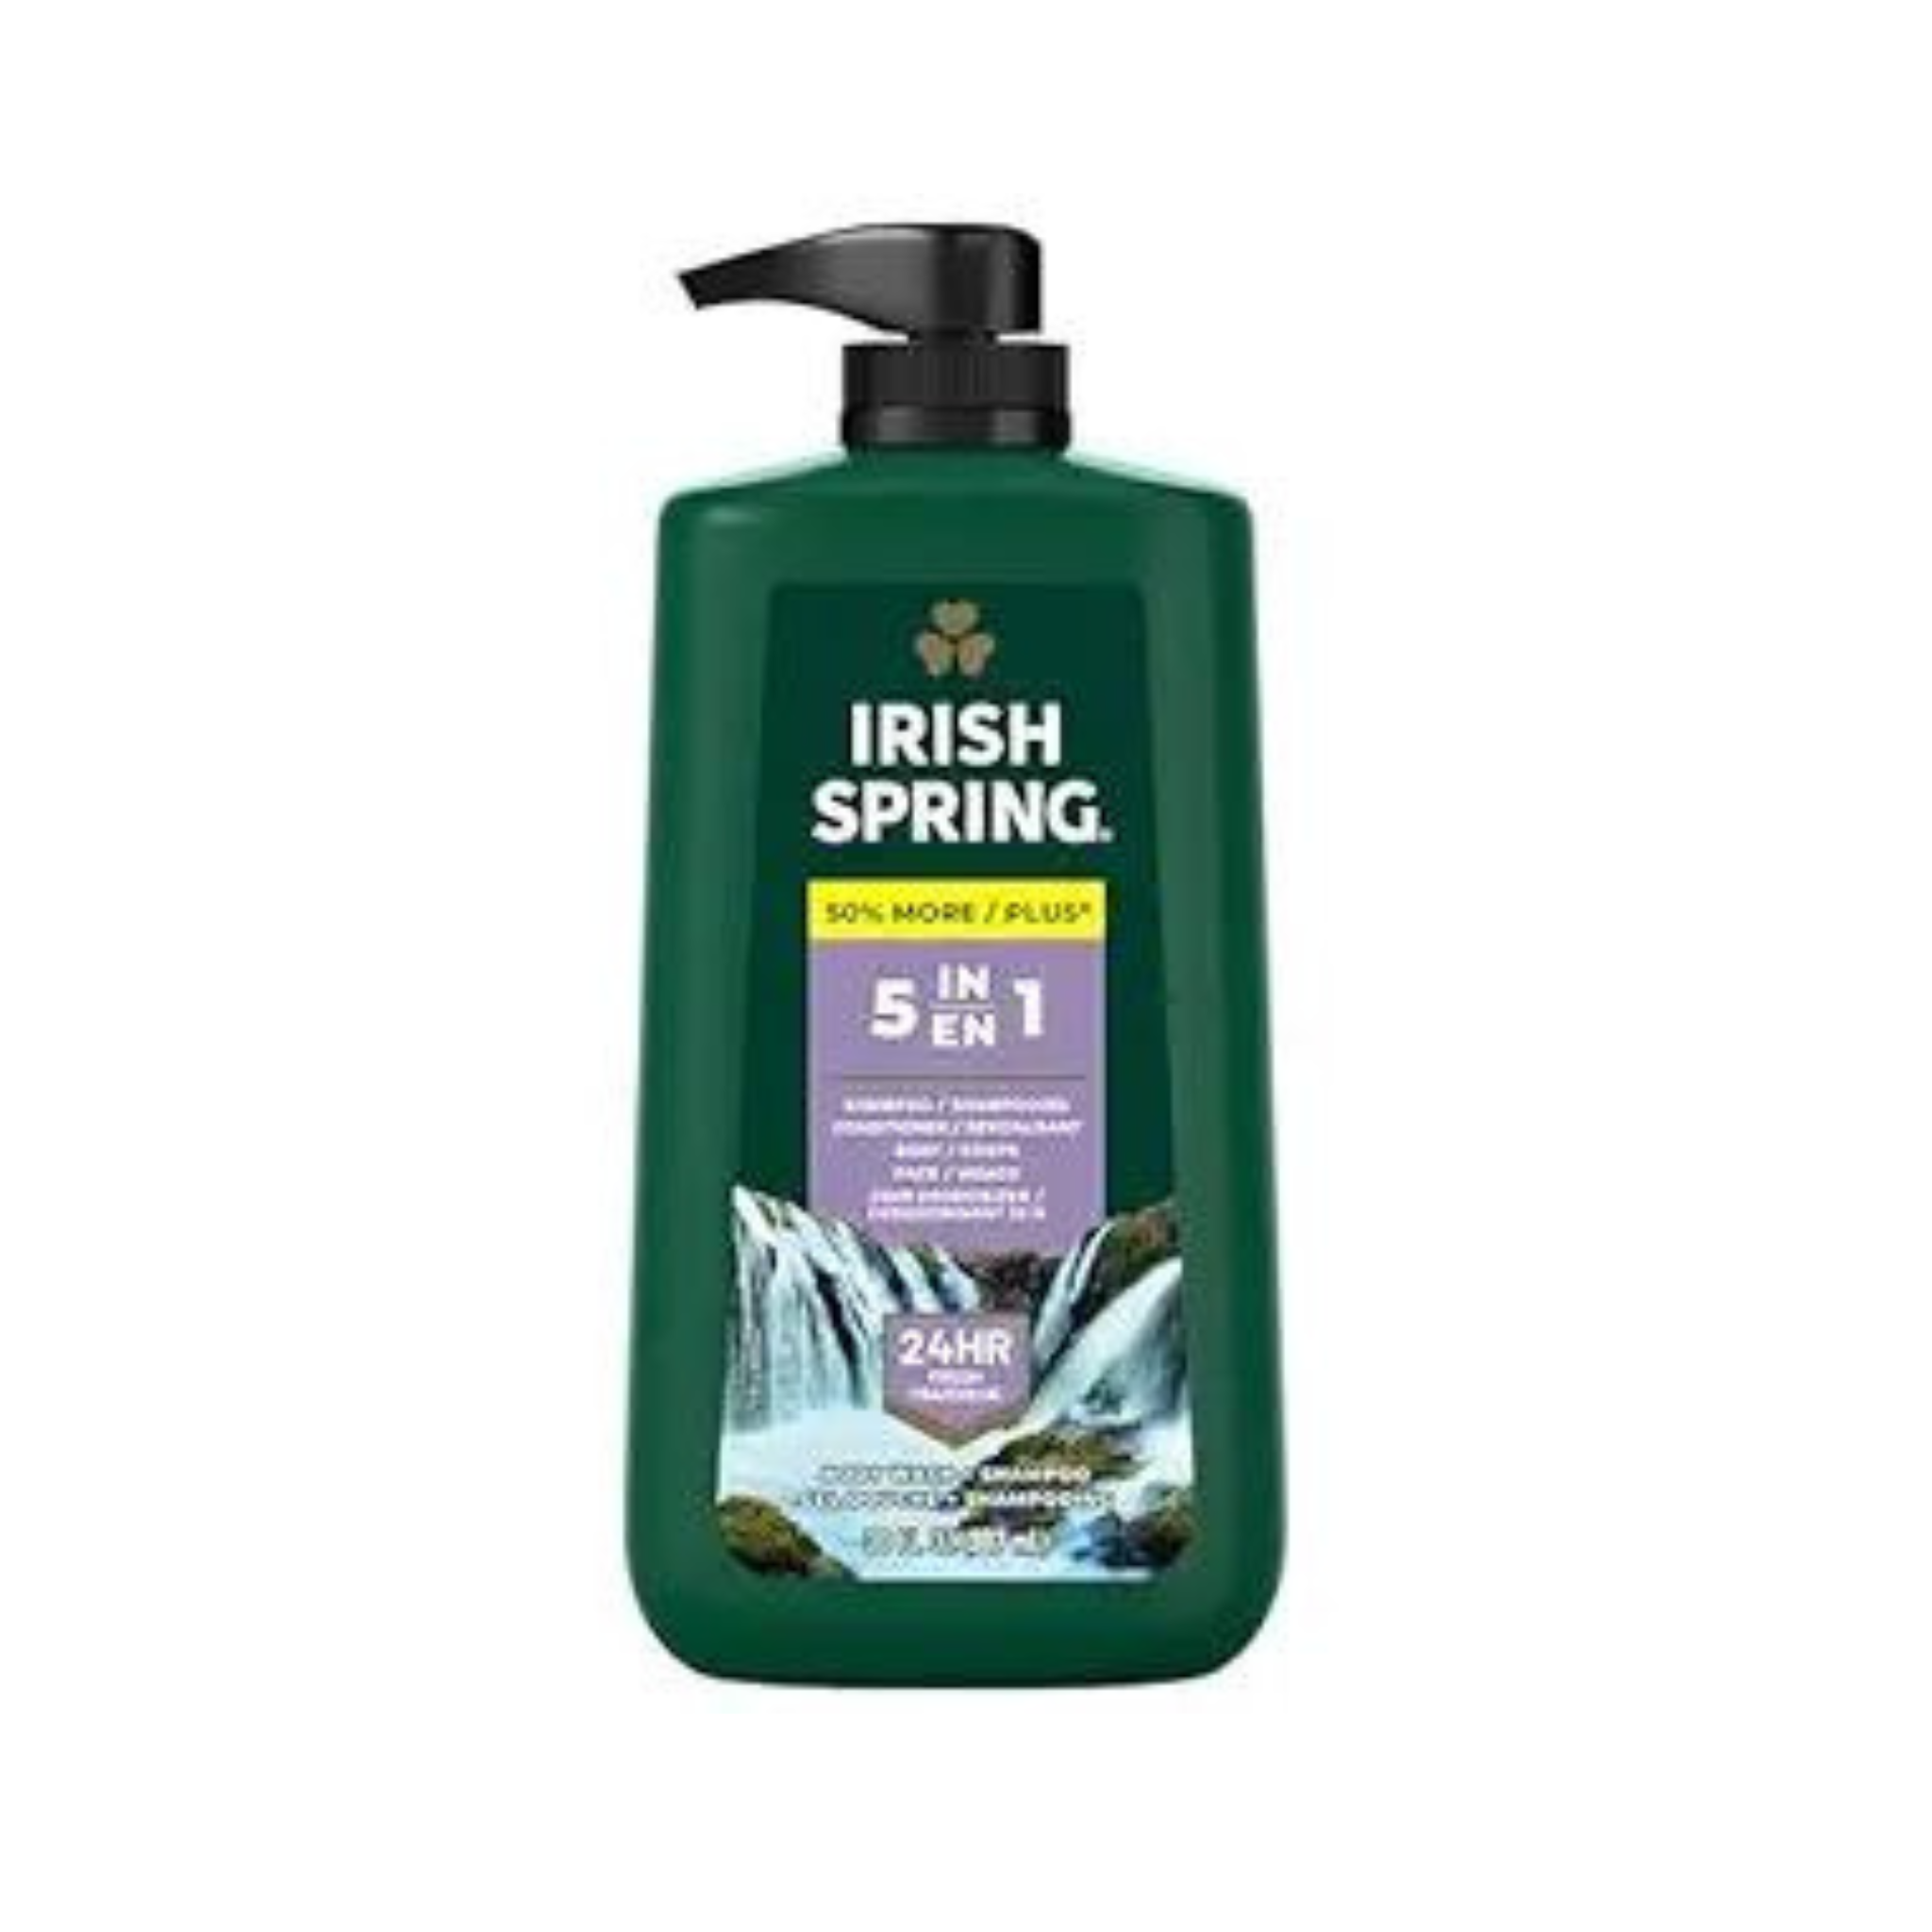 30-Oz Men's Irish Spring Body Wash Pump Bottle (5-in-1 or Original Clean Scent)